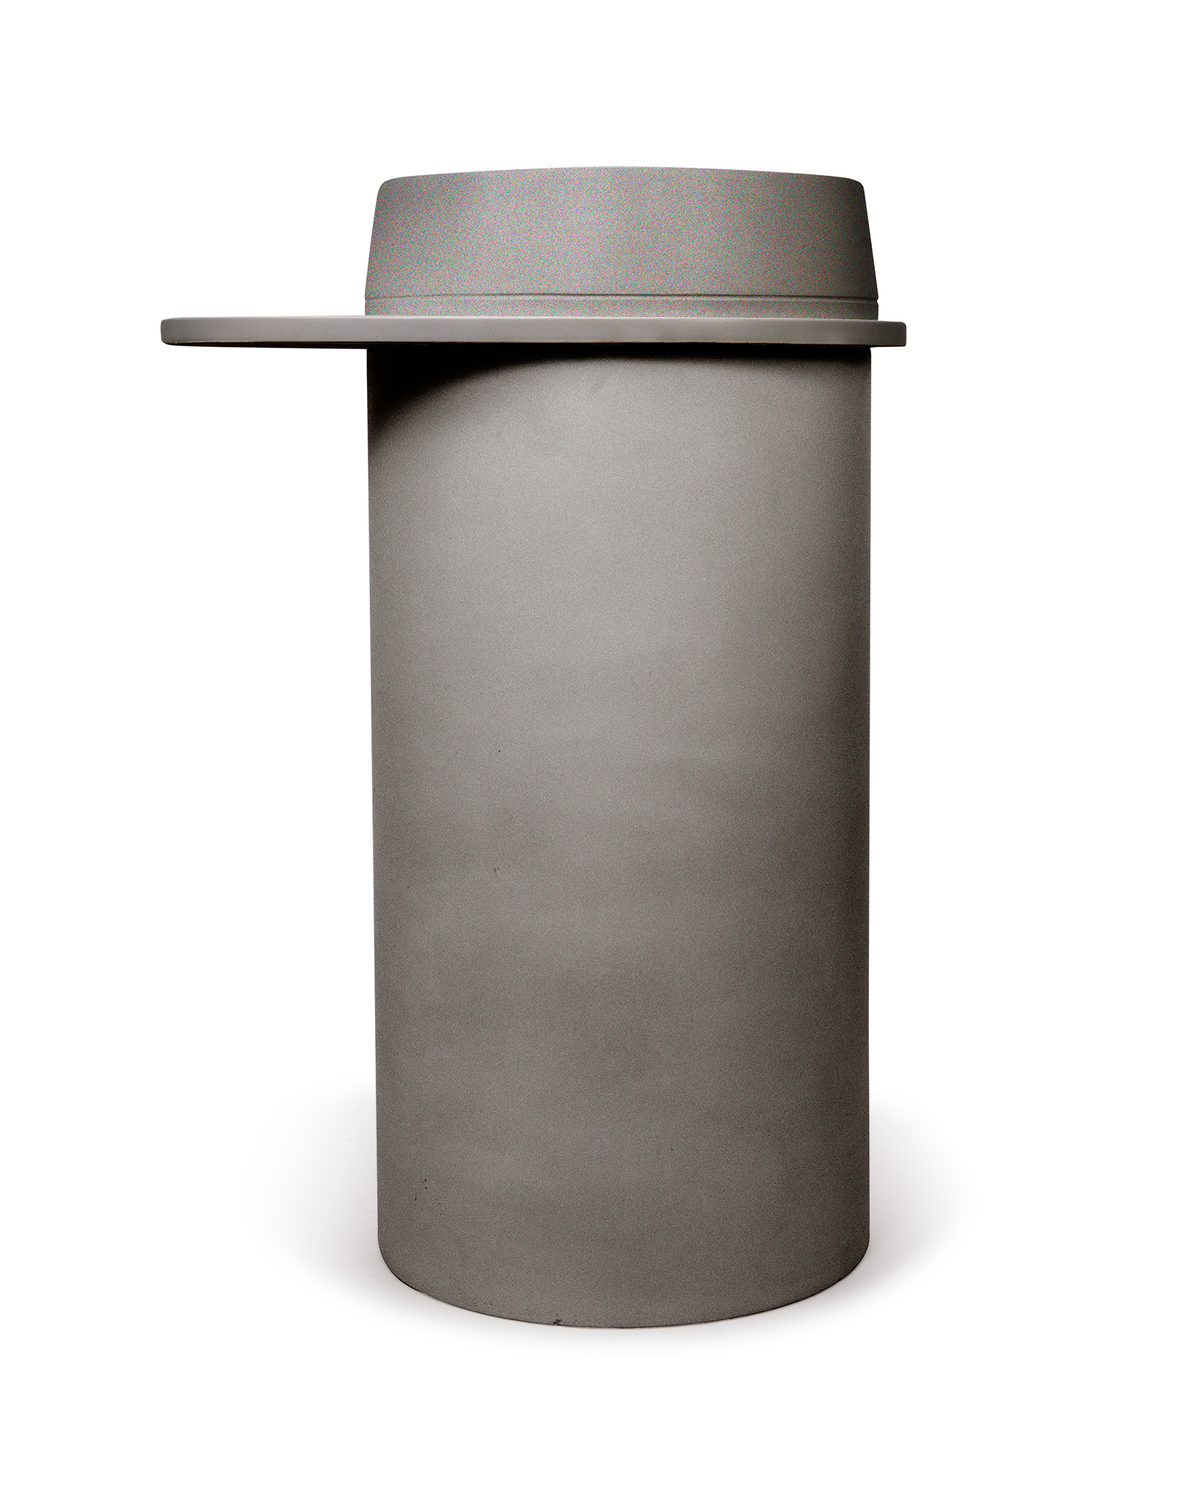 Cylinder - Funl Basin (Mid Tone Grey)